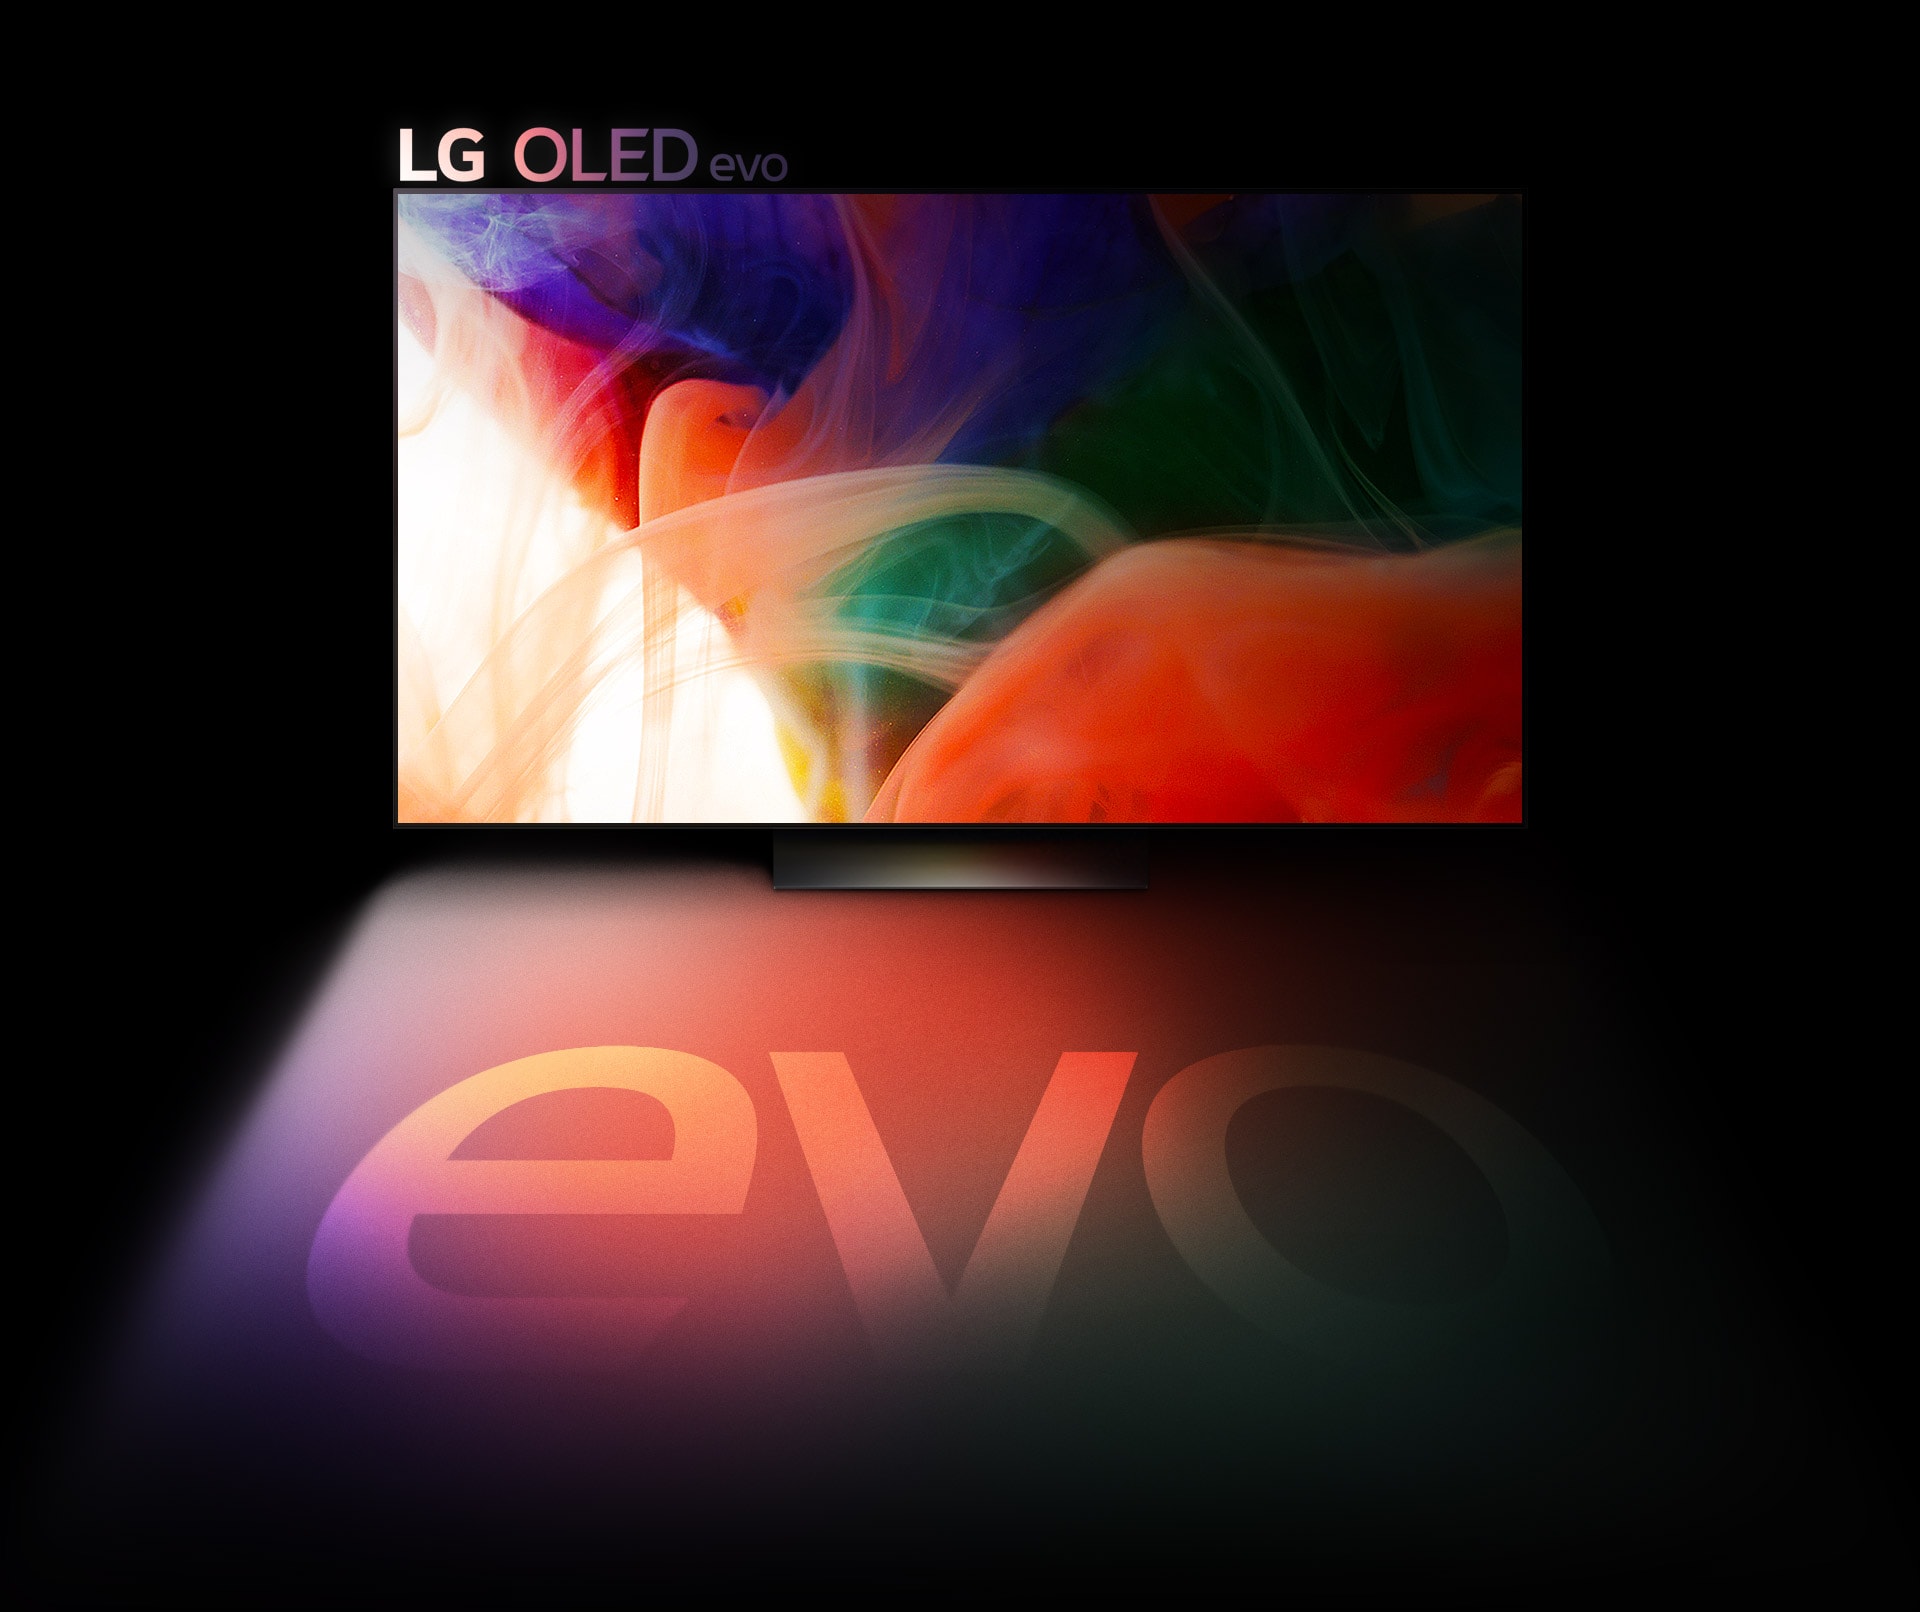 Živopisna apstraktna slika prikazana je na LG OLED evo TV-u